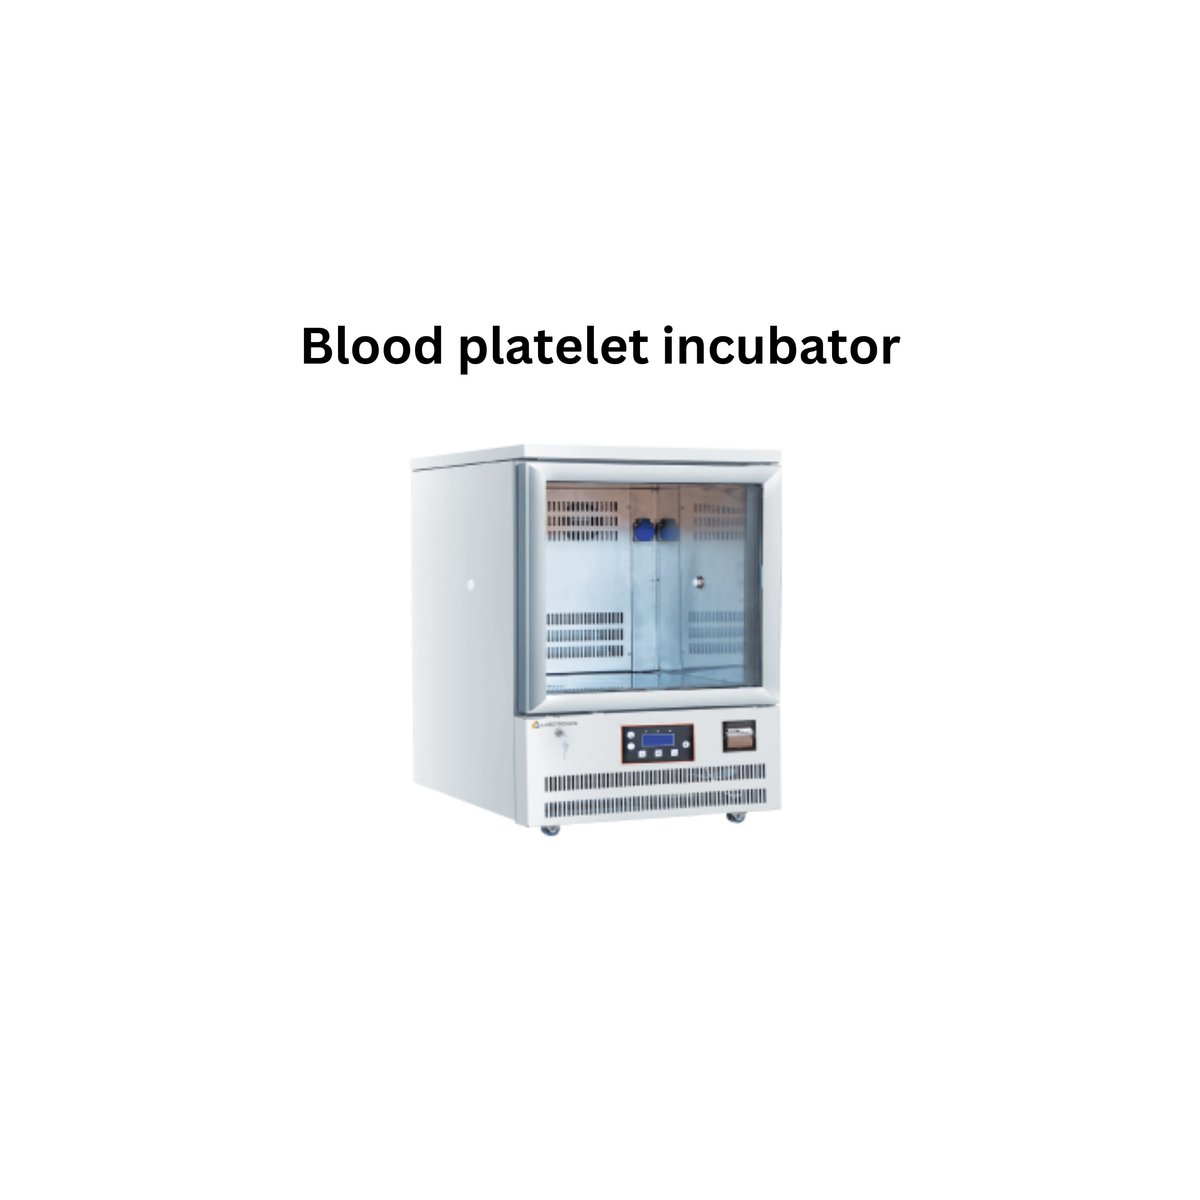 Blood platelet incubator.jpg